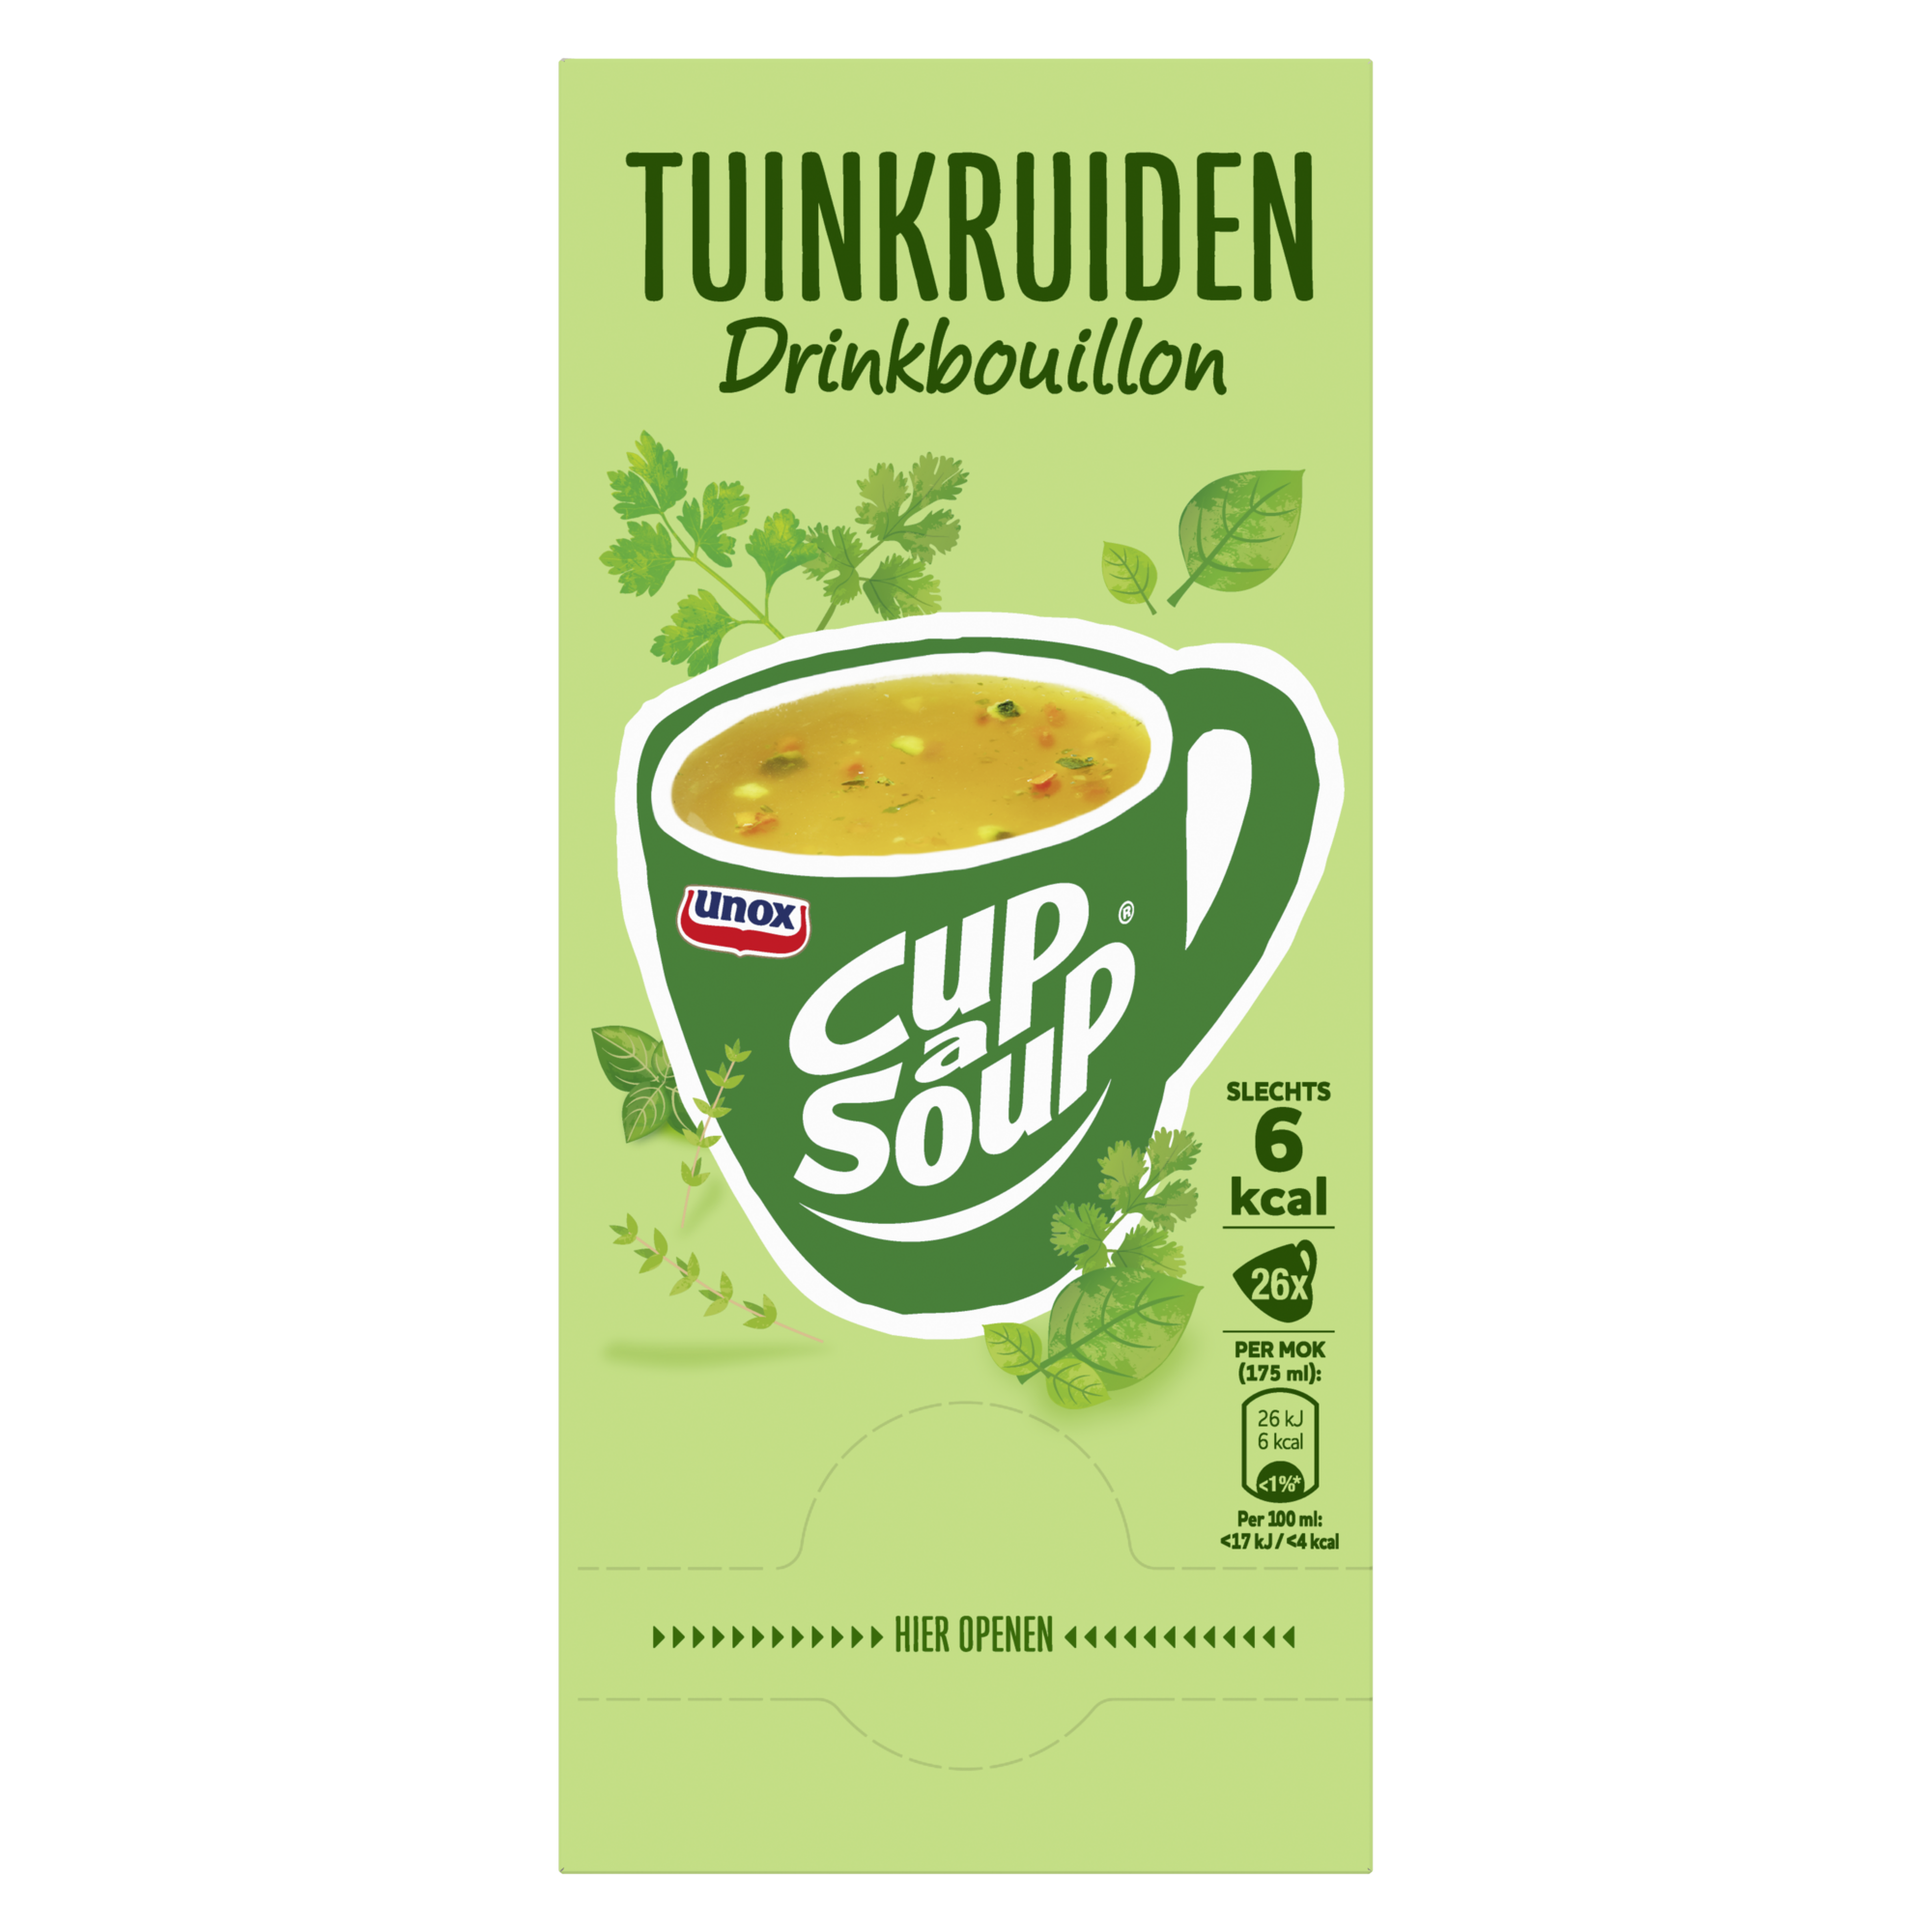 24385 Drinkbouillon tuinkruiden cup-a-soup 1x26 zak